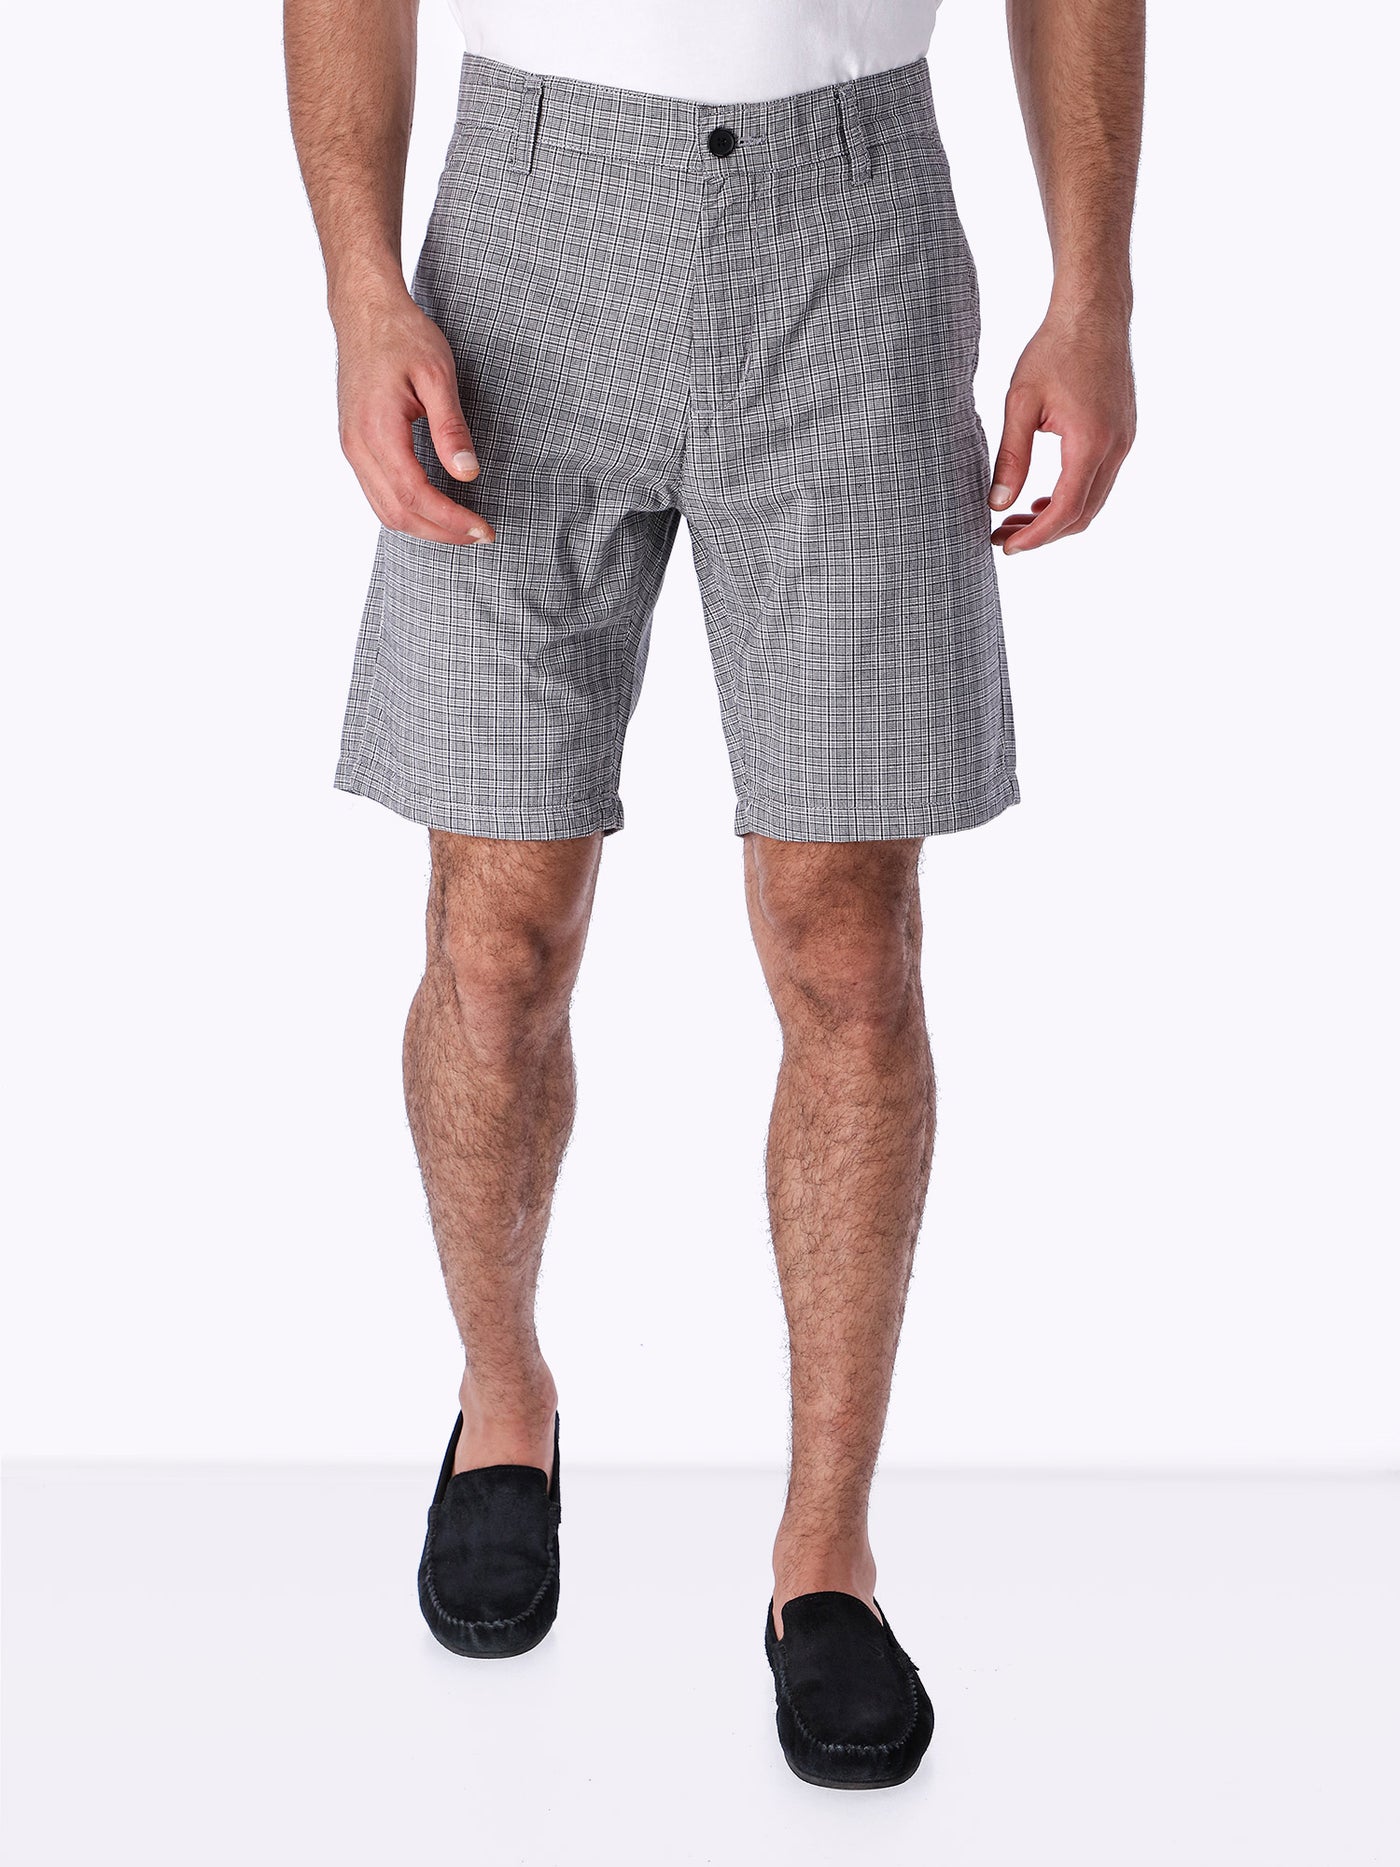 OR Men's Checkered Shorts